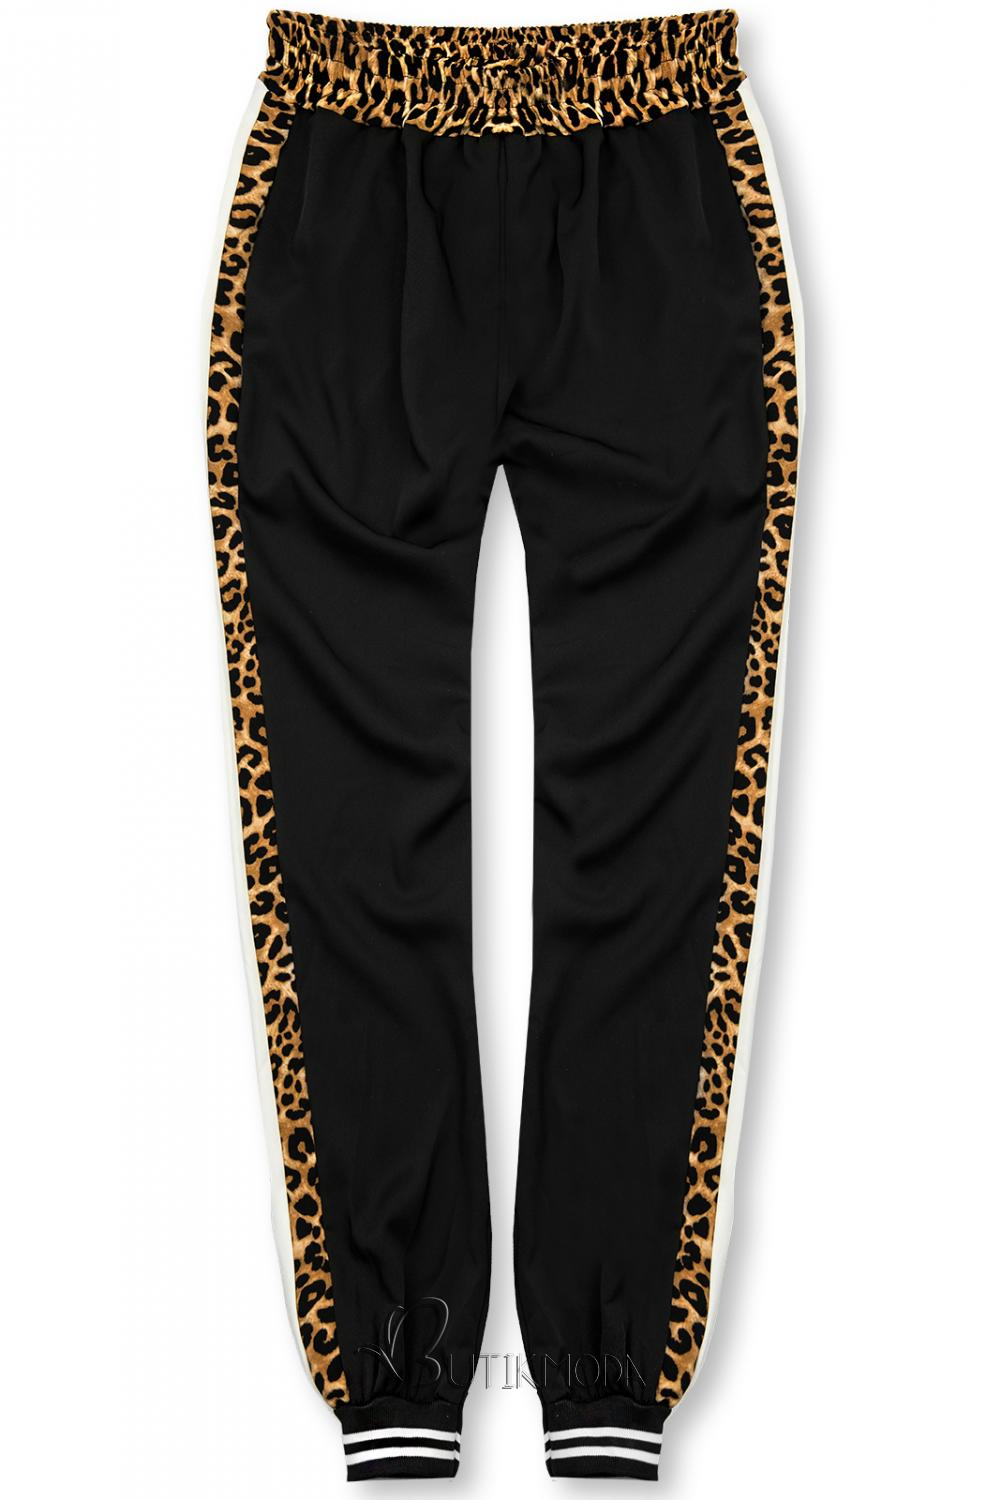 Pantaloni sport negri cu imprimeu tigrat